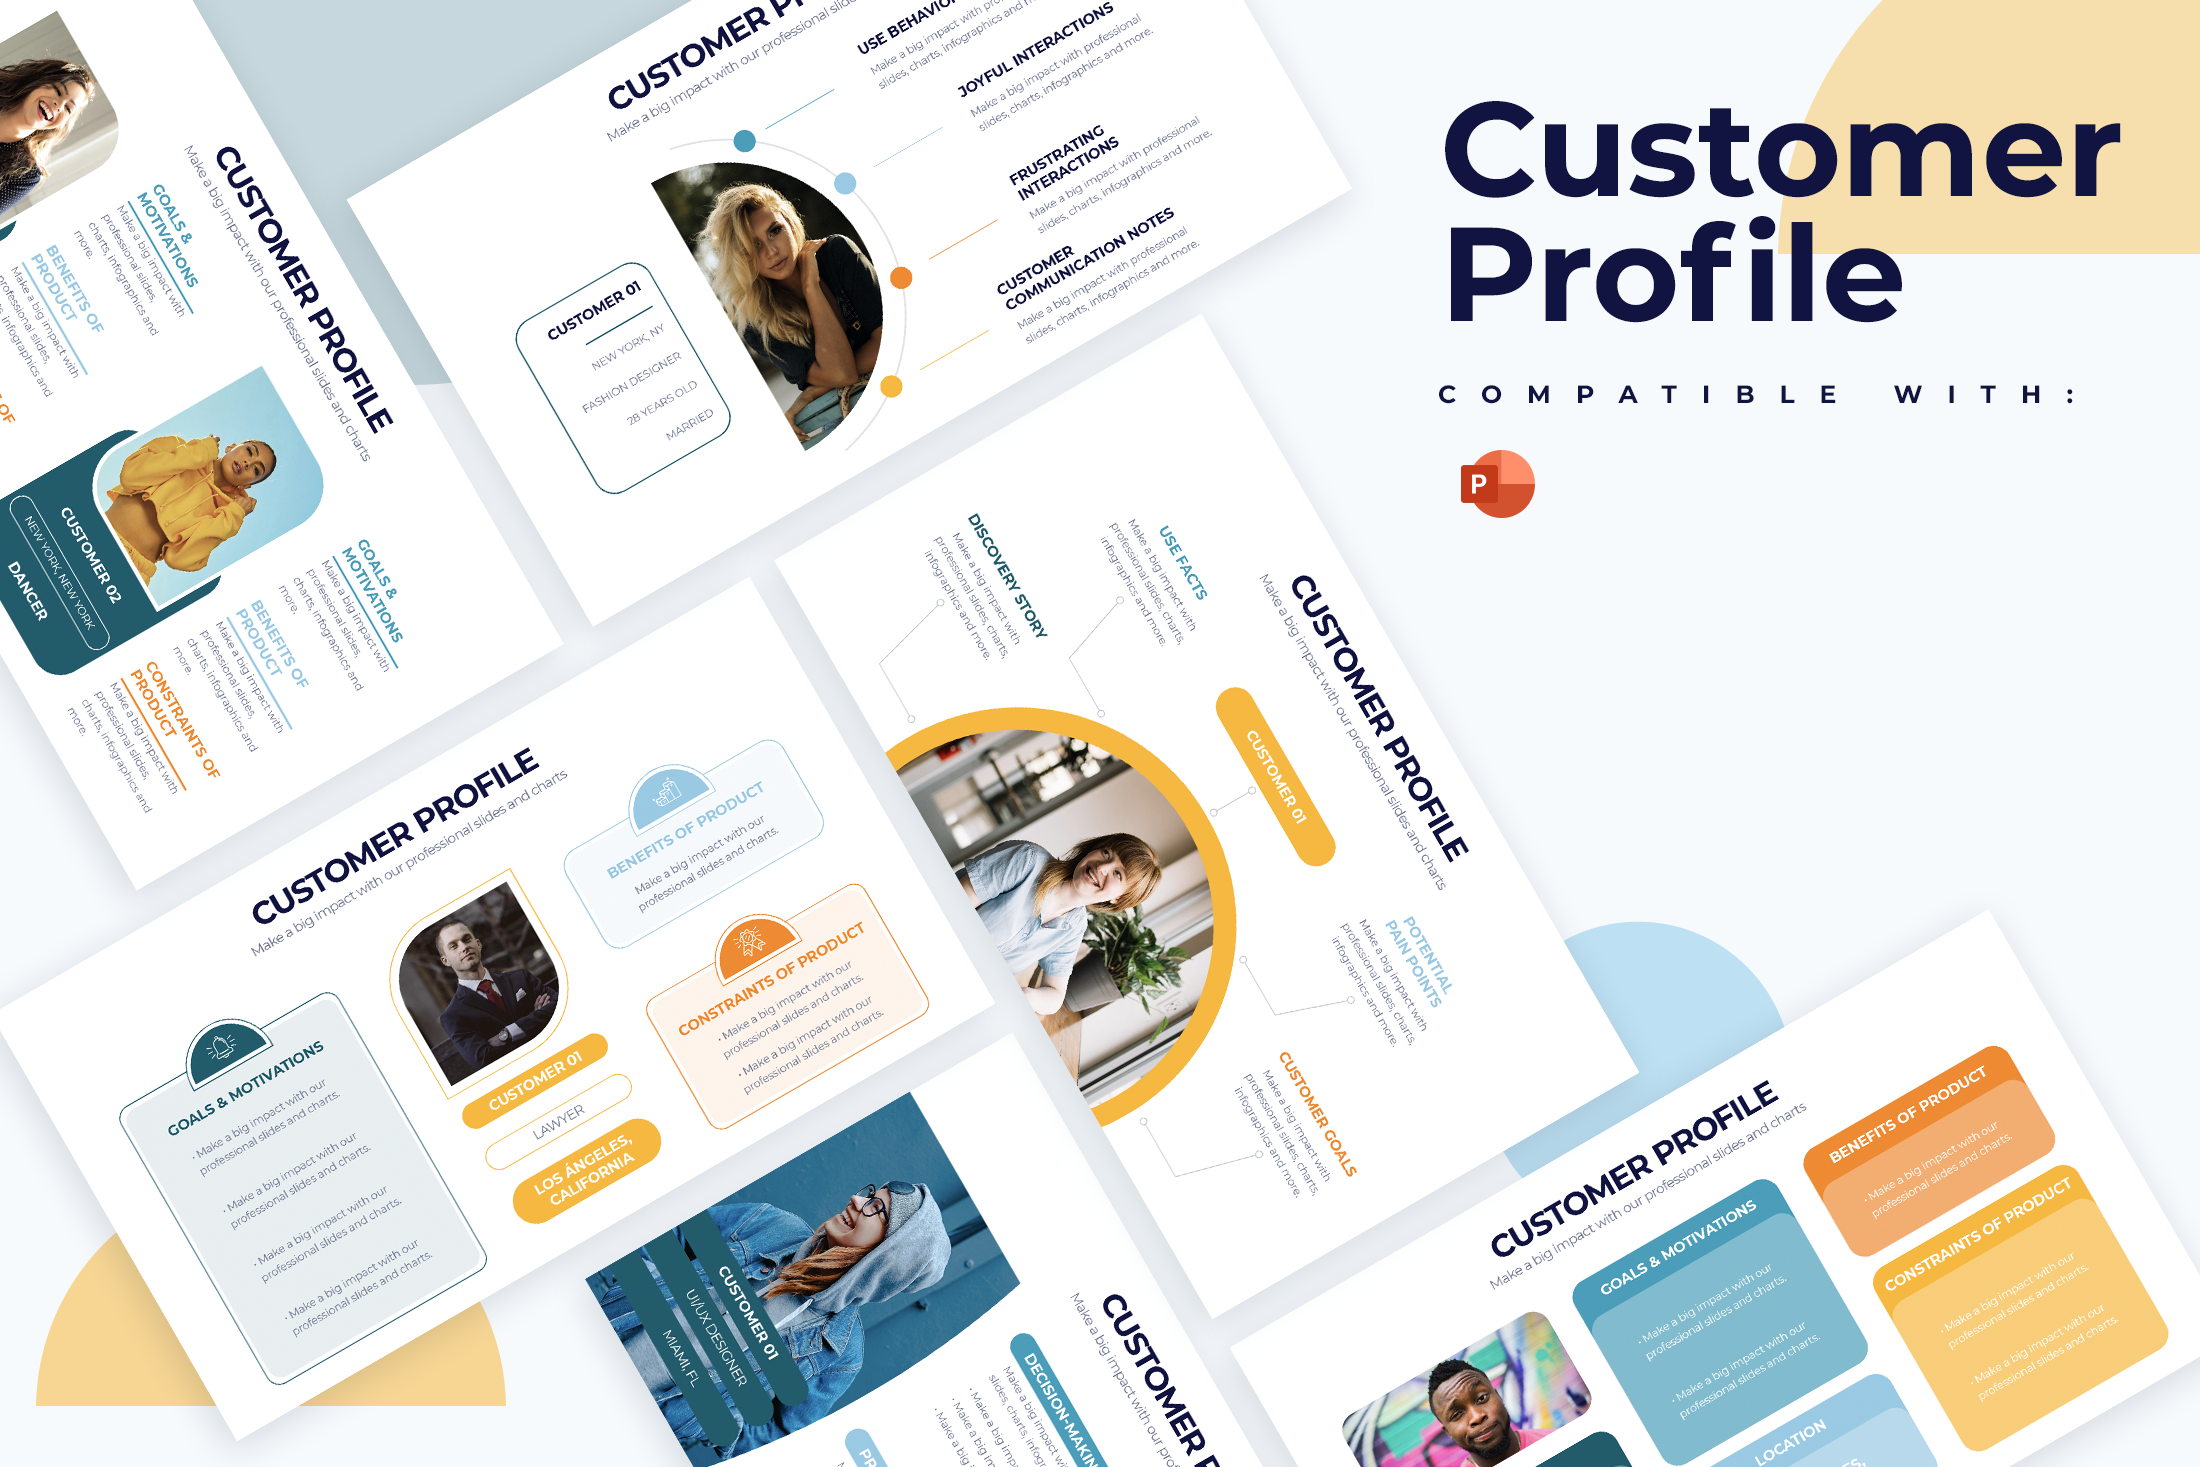 customer-profile-infographic-powerpoint-template-slidewalla